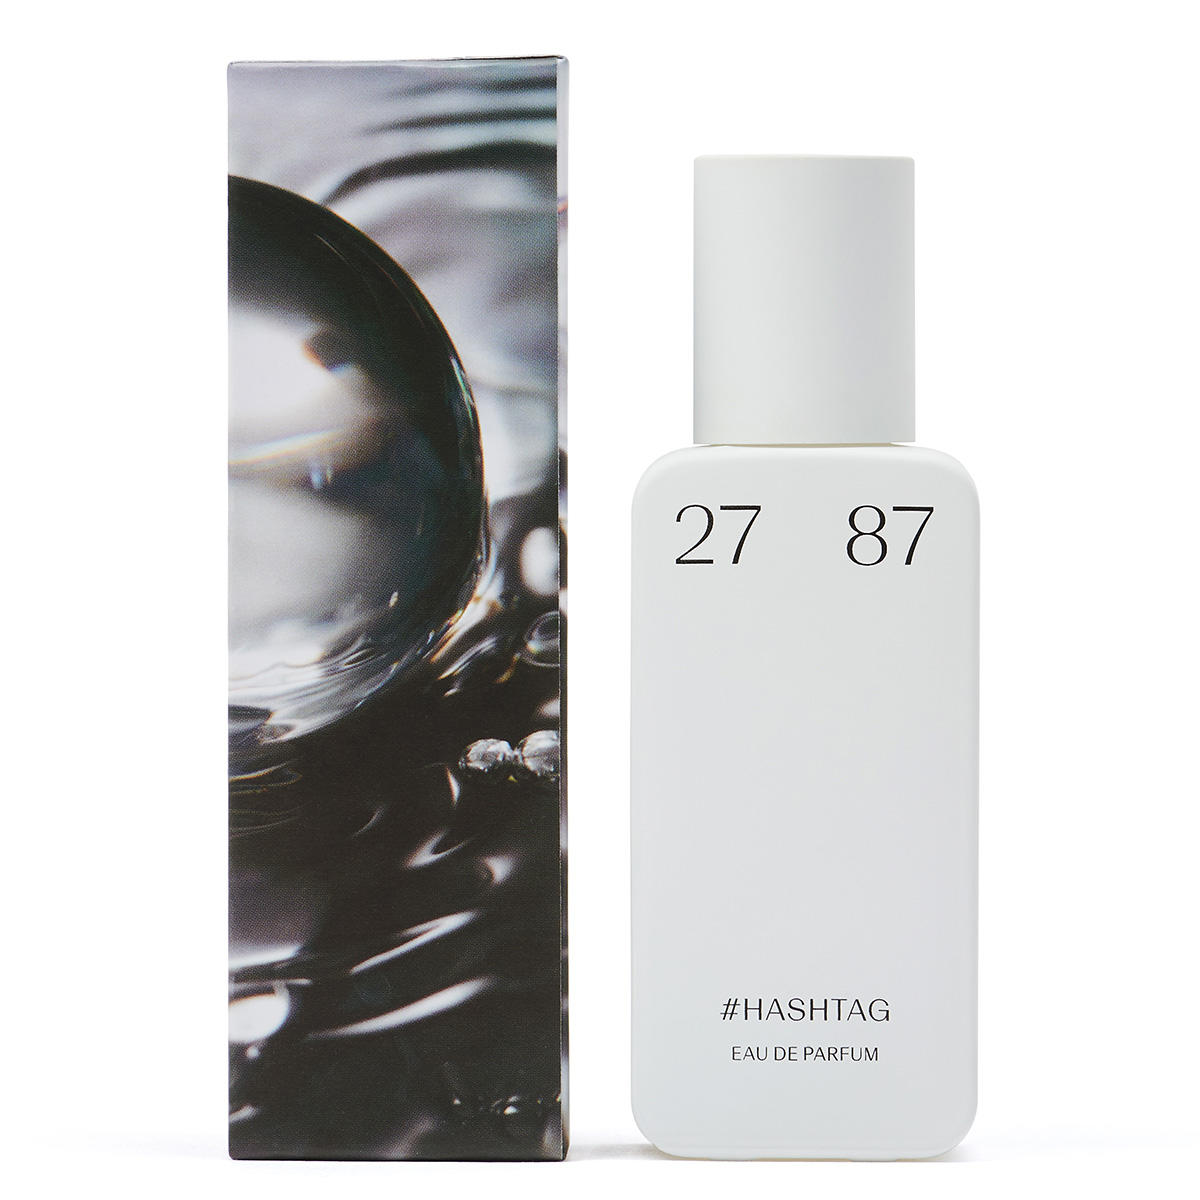 27 87 Perfumes #hashtag Eau de Parfum 27 ml - 2